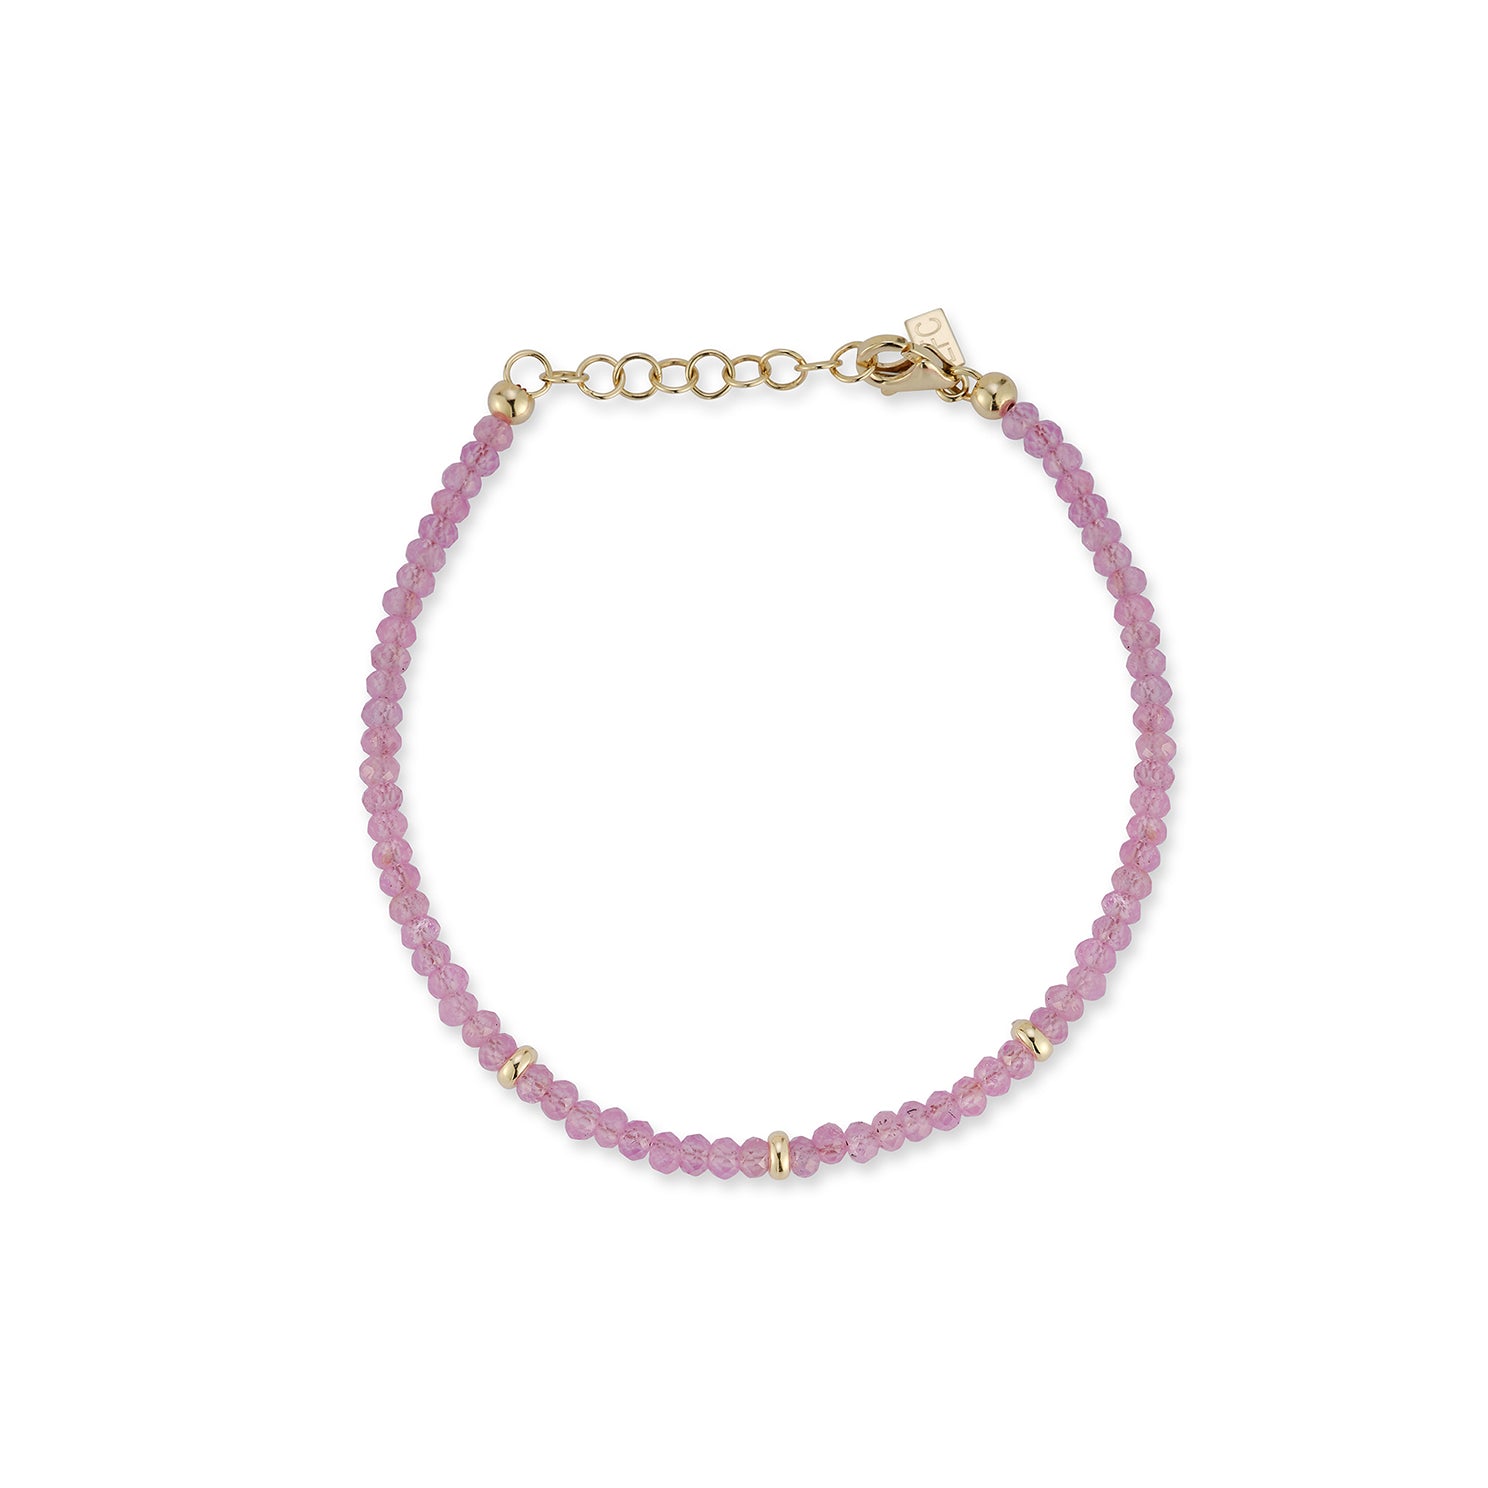 Birthstone Bead Bracelet in Pink Sapphire in 14k yellow gold chian